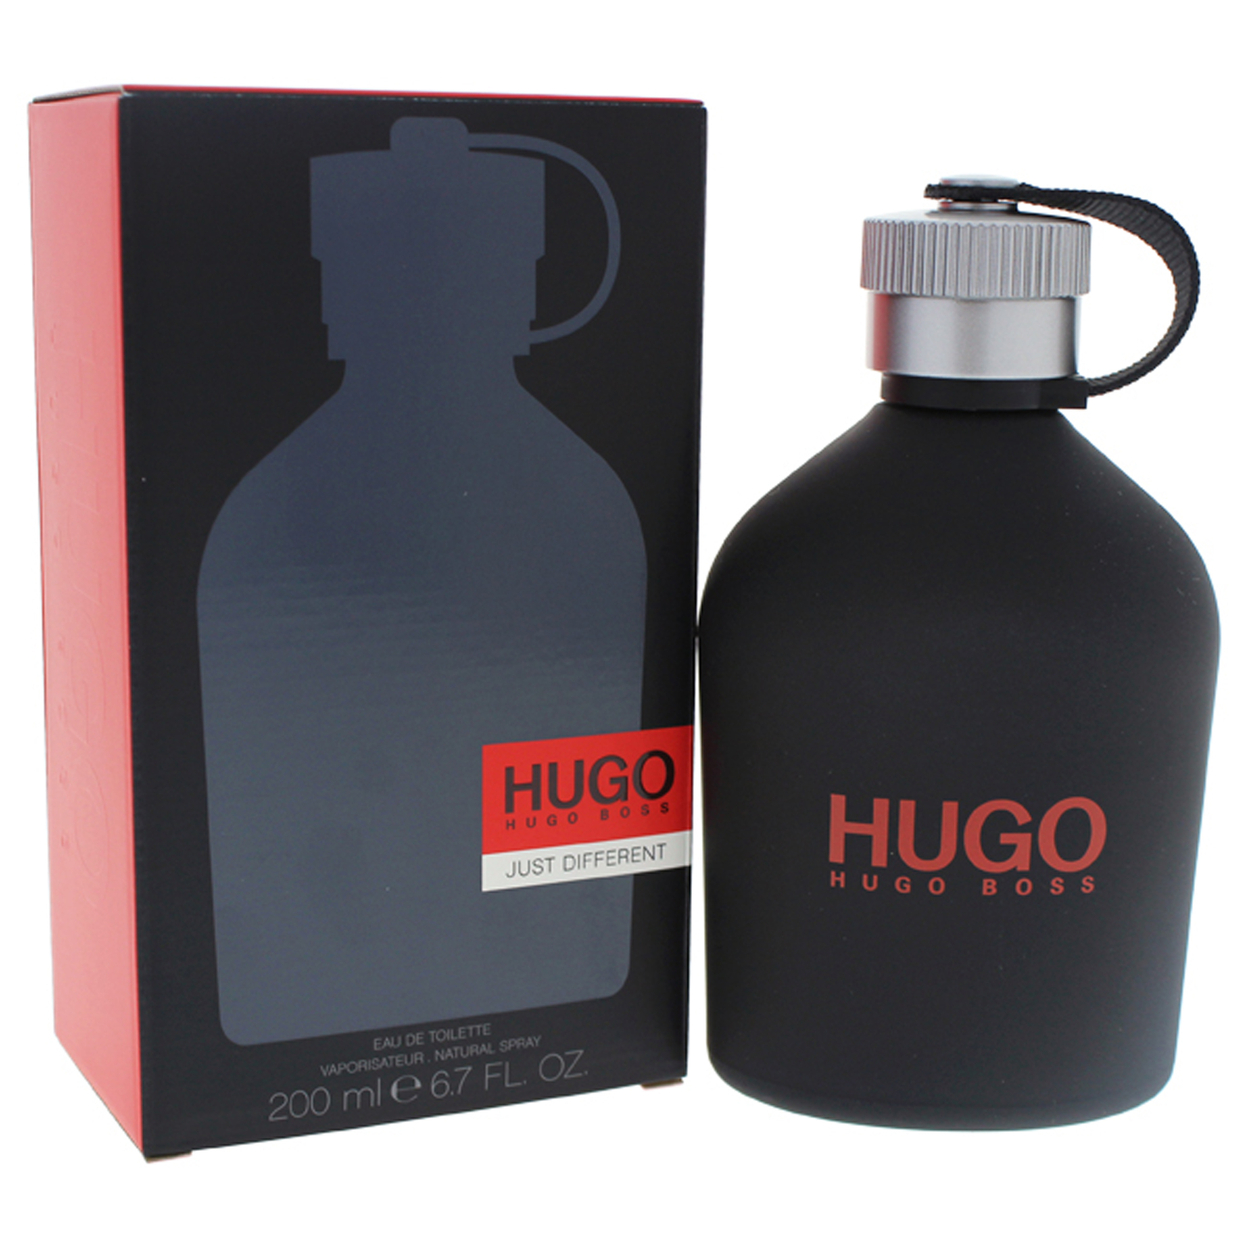 Hugo Boss Hugo Just Different EDT Spray 6.7 Oz